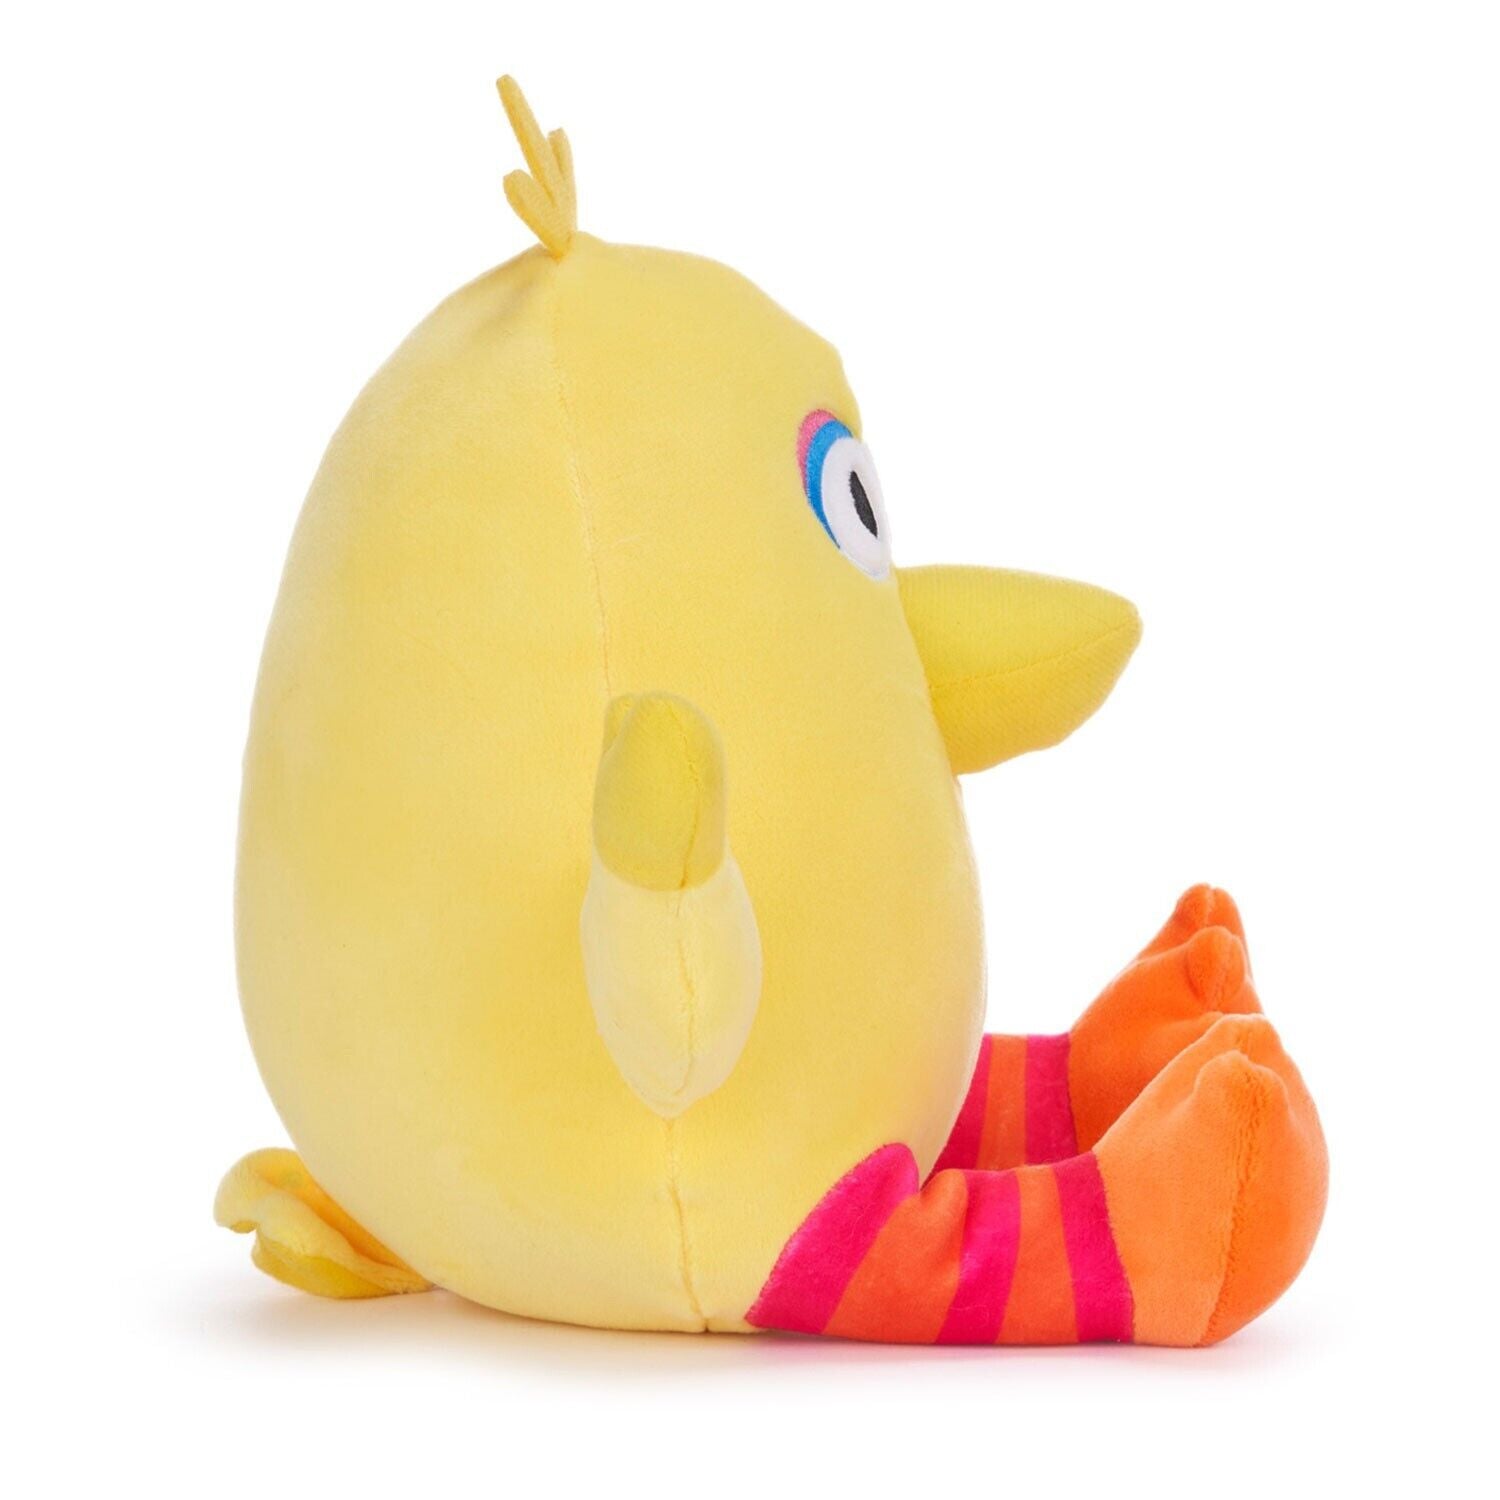 "New Sesame Street Squashy Podgies 8" Plush Big Bird Toy"